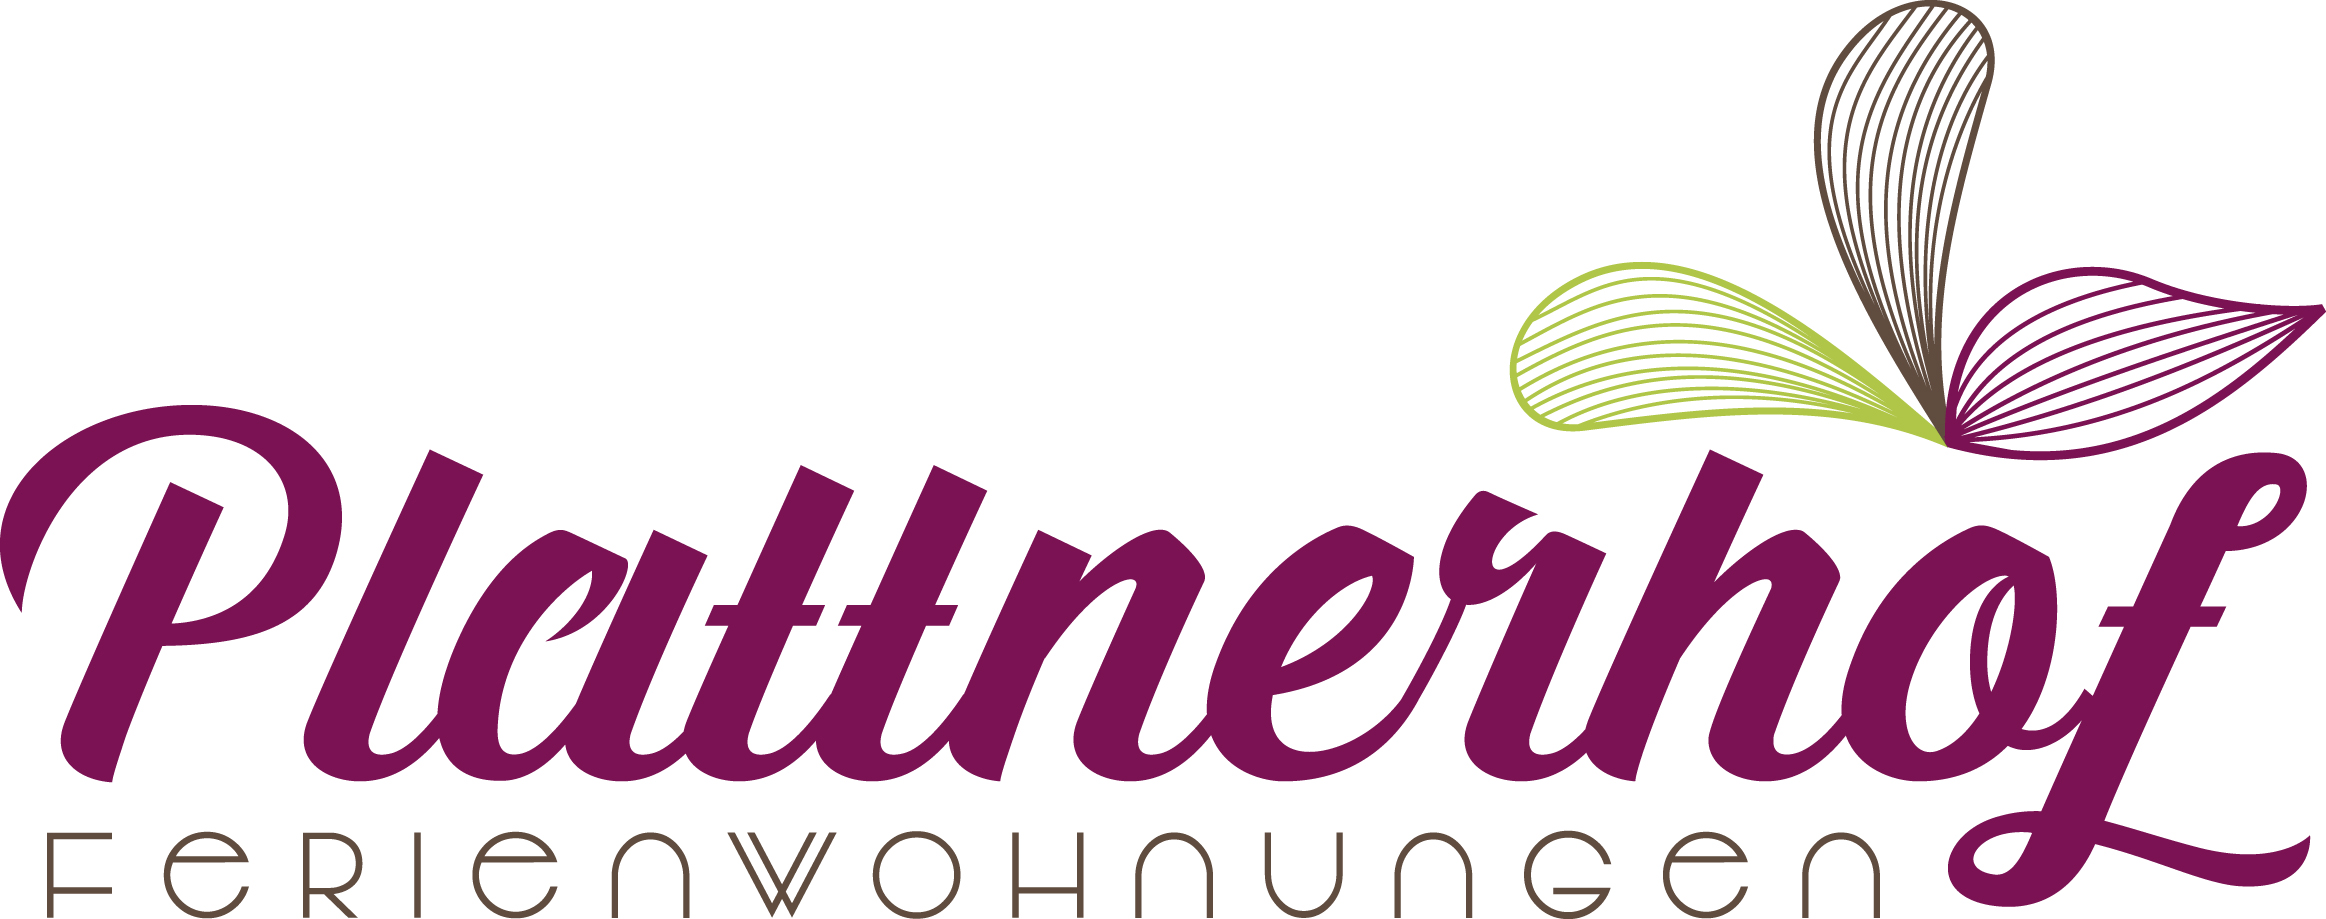 Plattnerhof Logo 4c